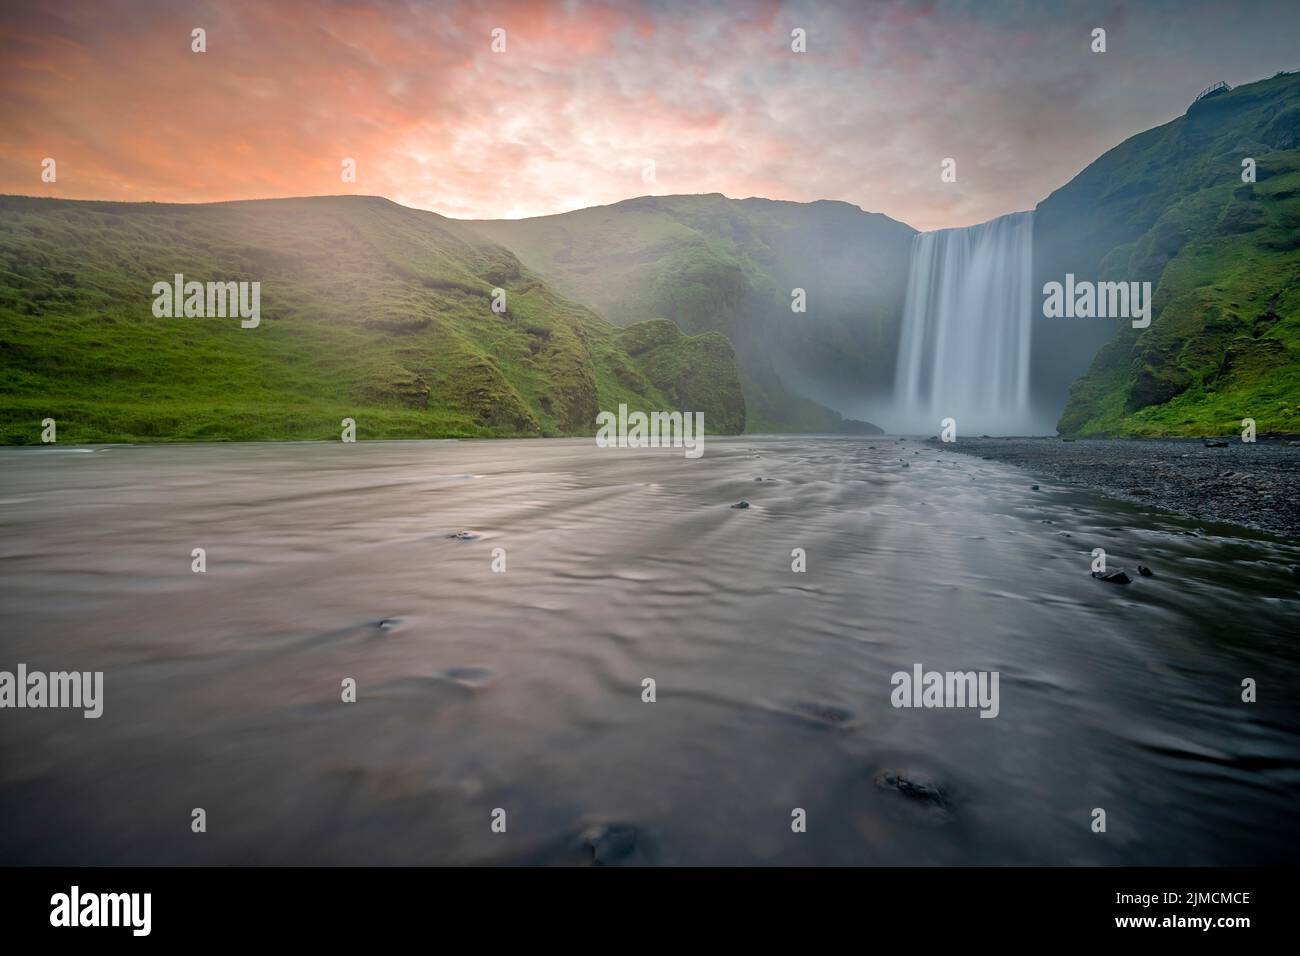 Lunga esposizione, fiume Skoga, cascata di Skogafoss, tramonto atmosferico, Islanda meridionale, Islanda Foto Stock